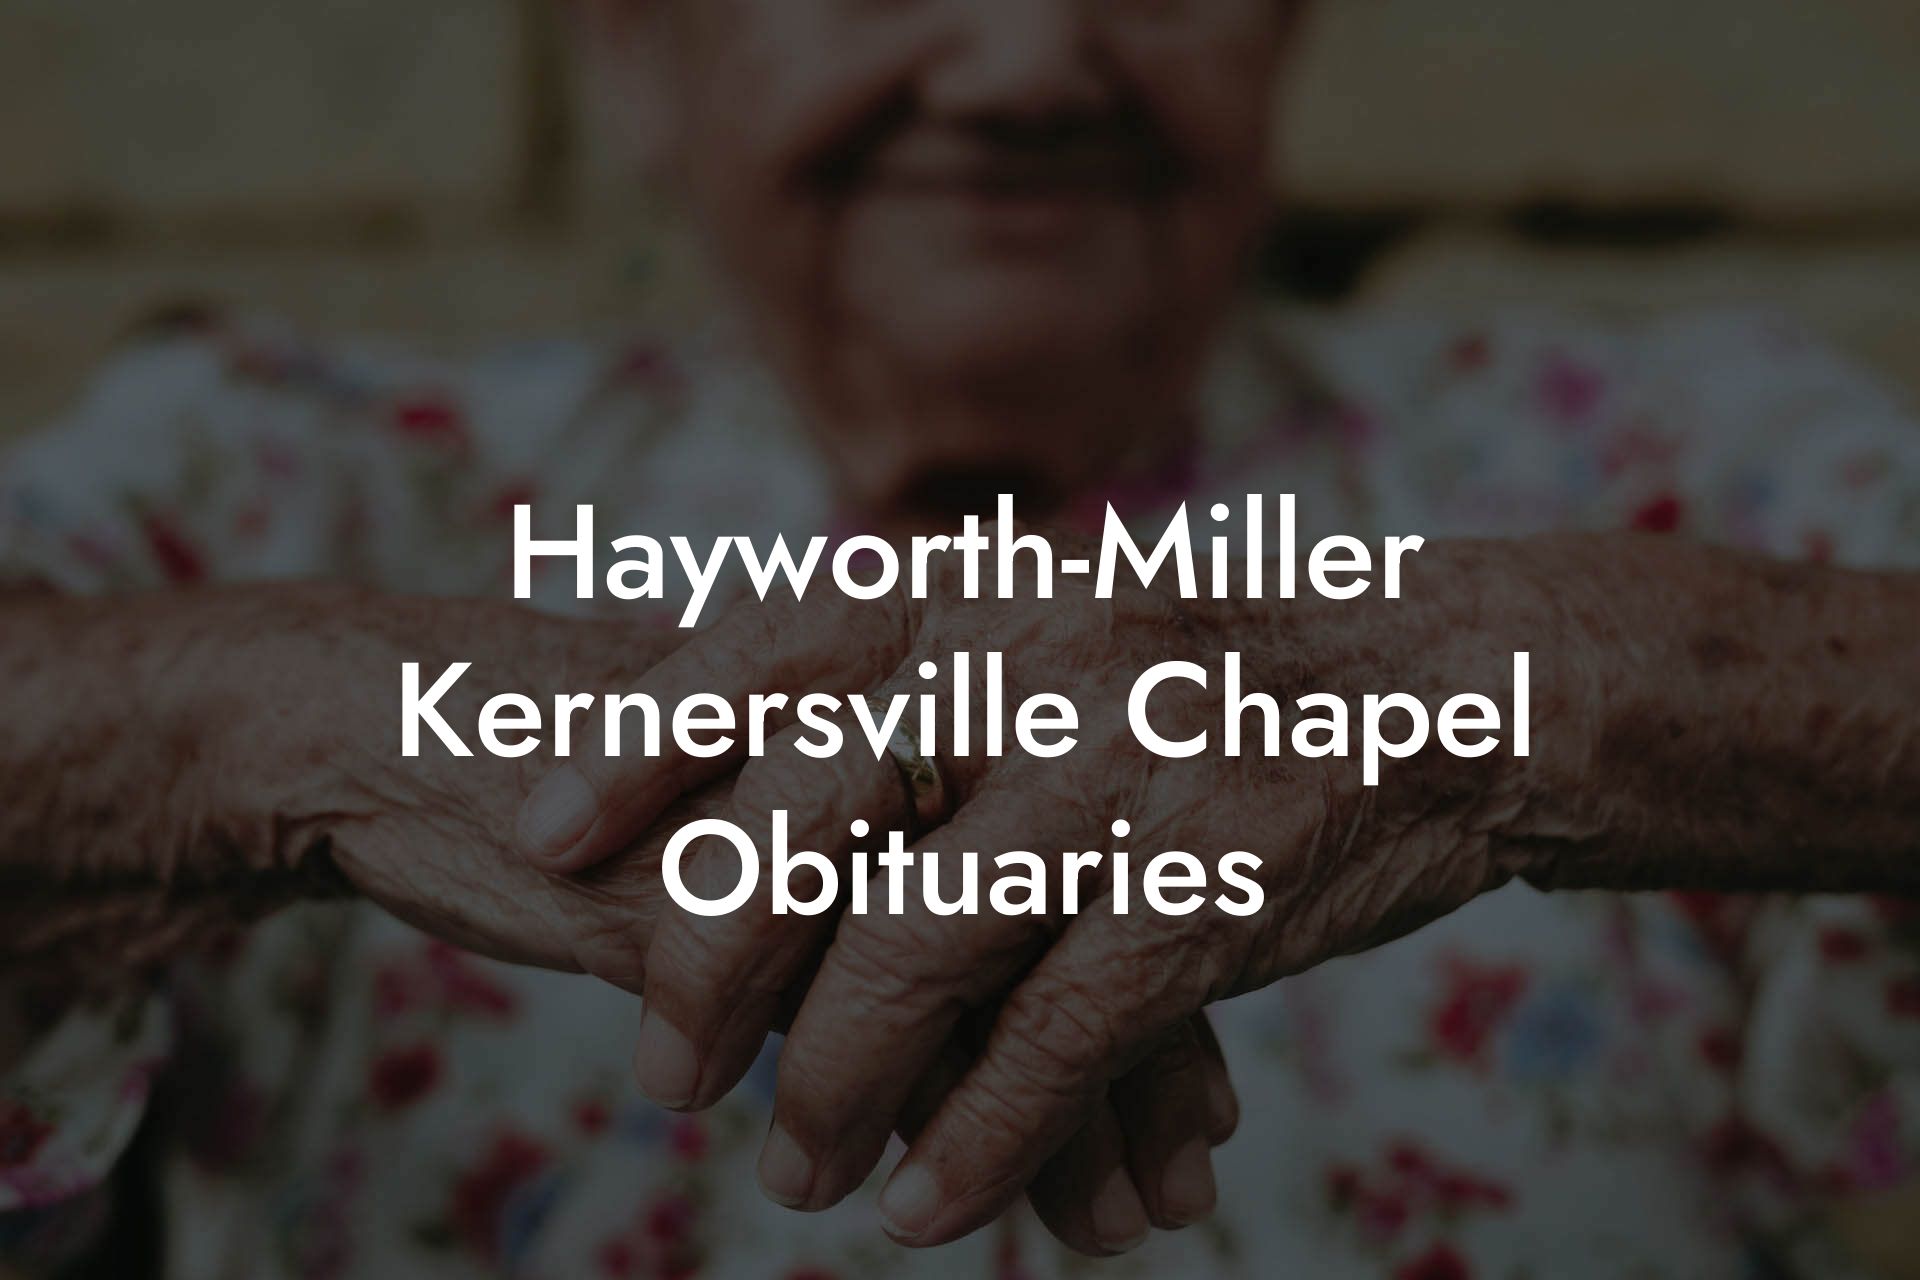 Hayworth-Miller Kernersville Chapel Obituaries